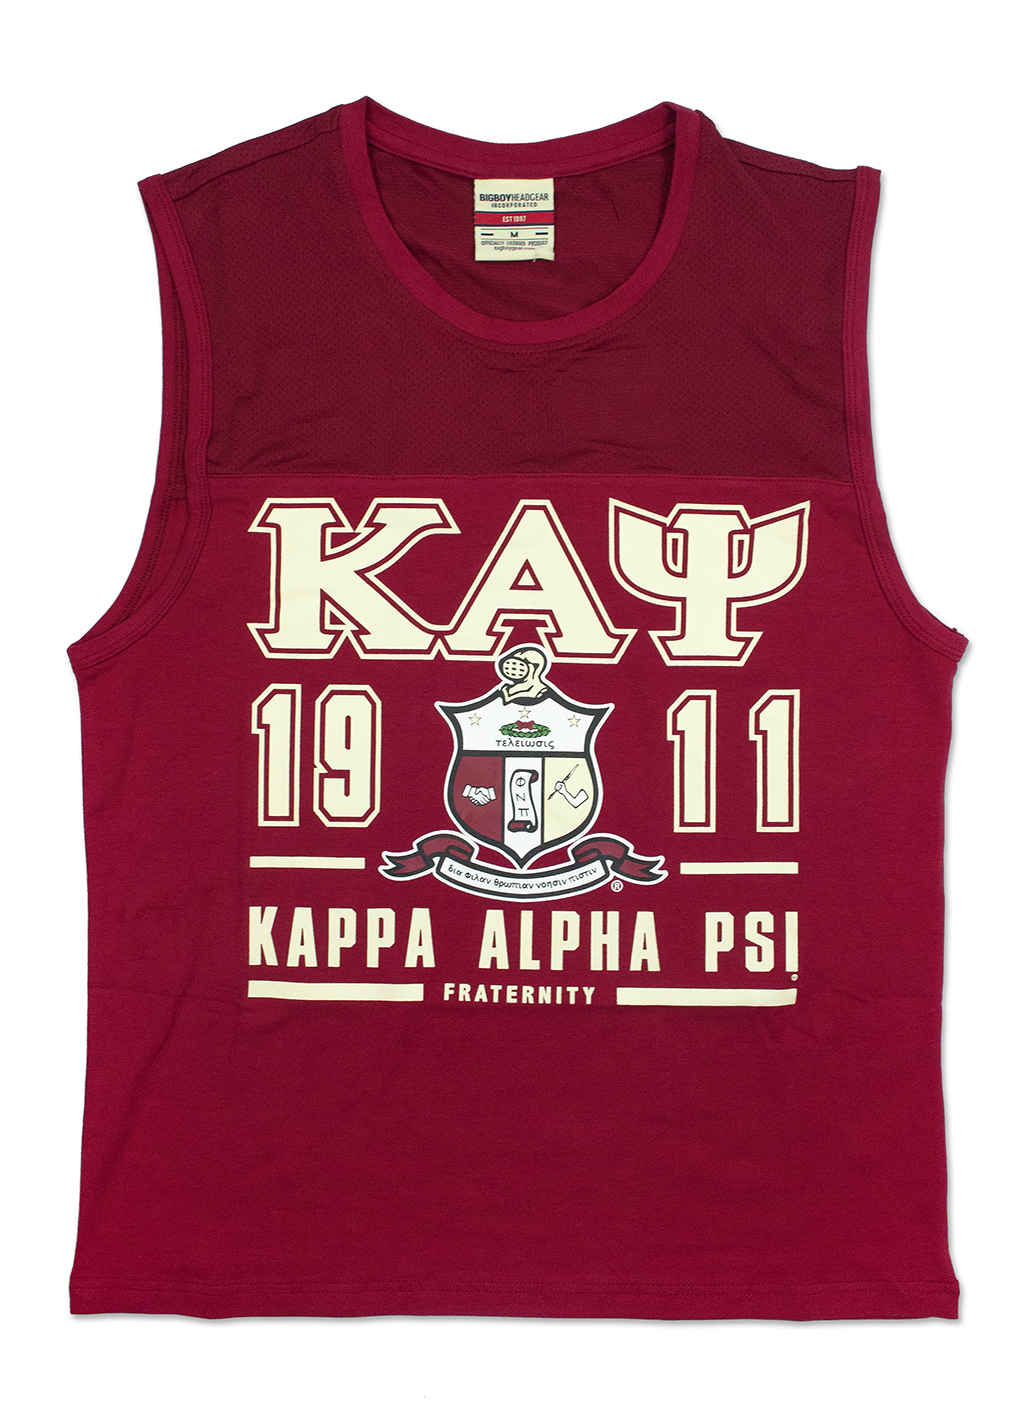 Kappa Alpha Psi sleeveless Shirt